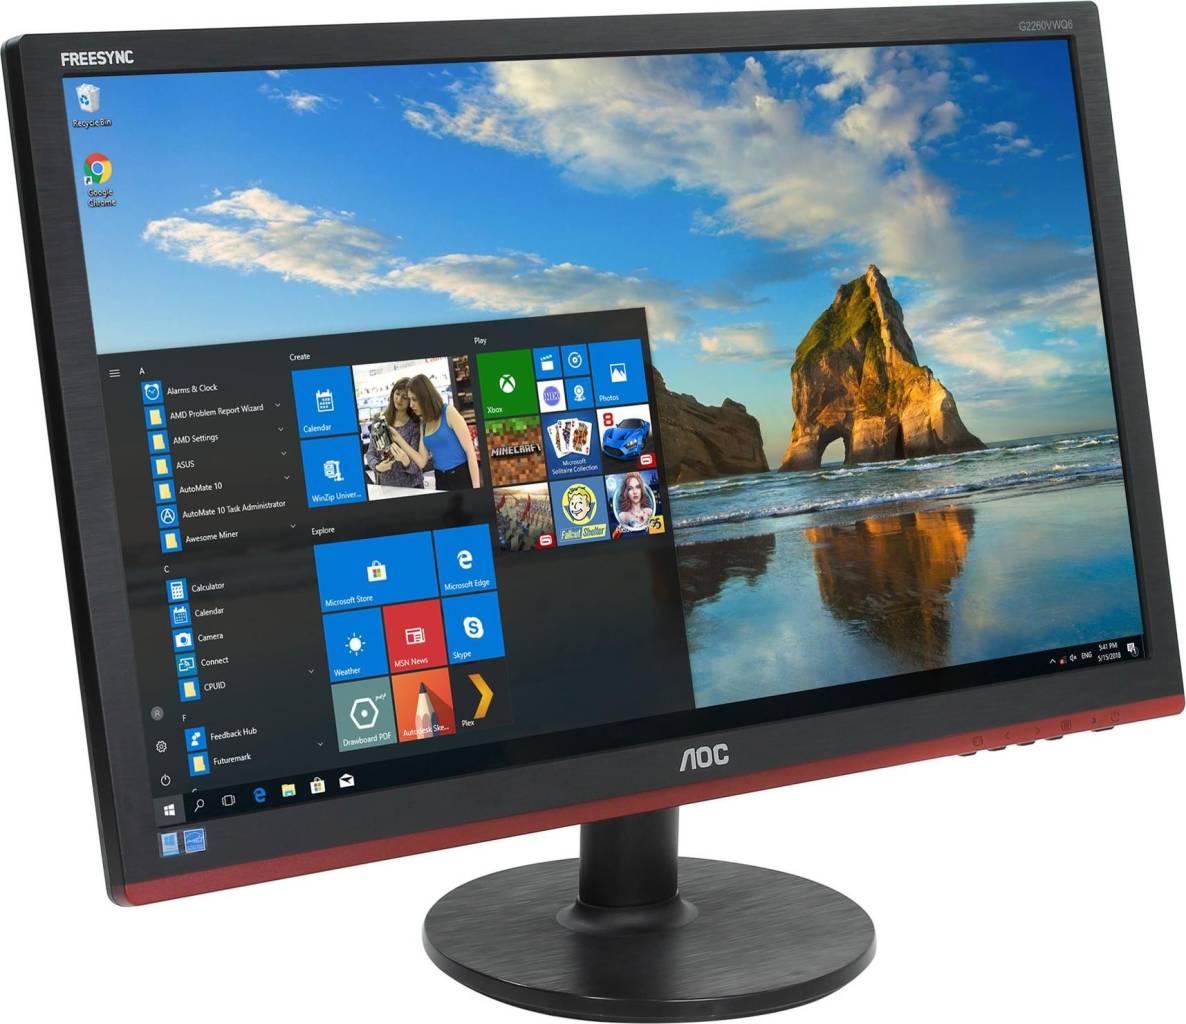   21.5 AOC G2260VWQ6 [Black&Red] (LCD, Wide, 1920x1080, D-Sub, HDMI, DP)